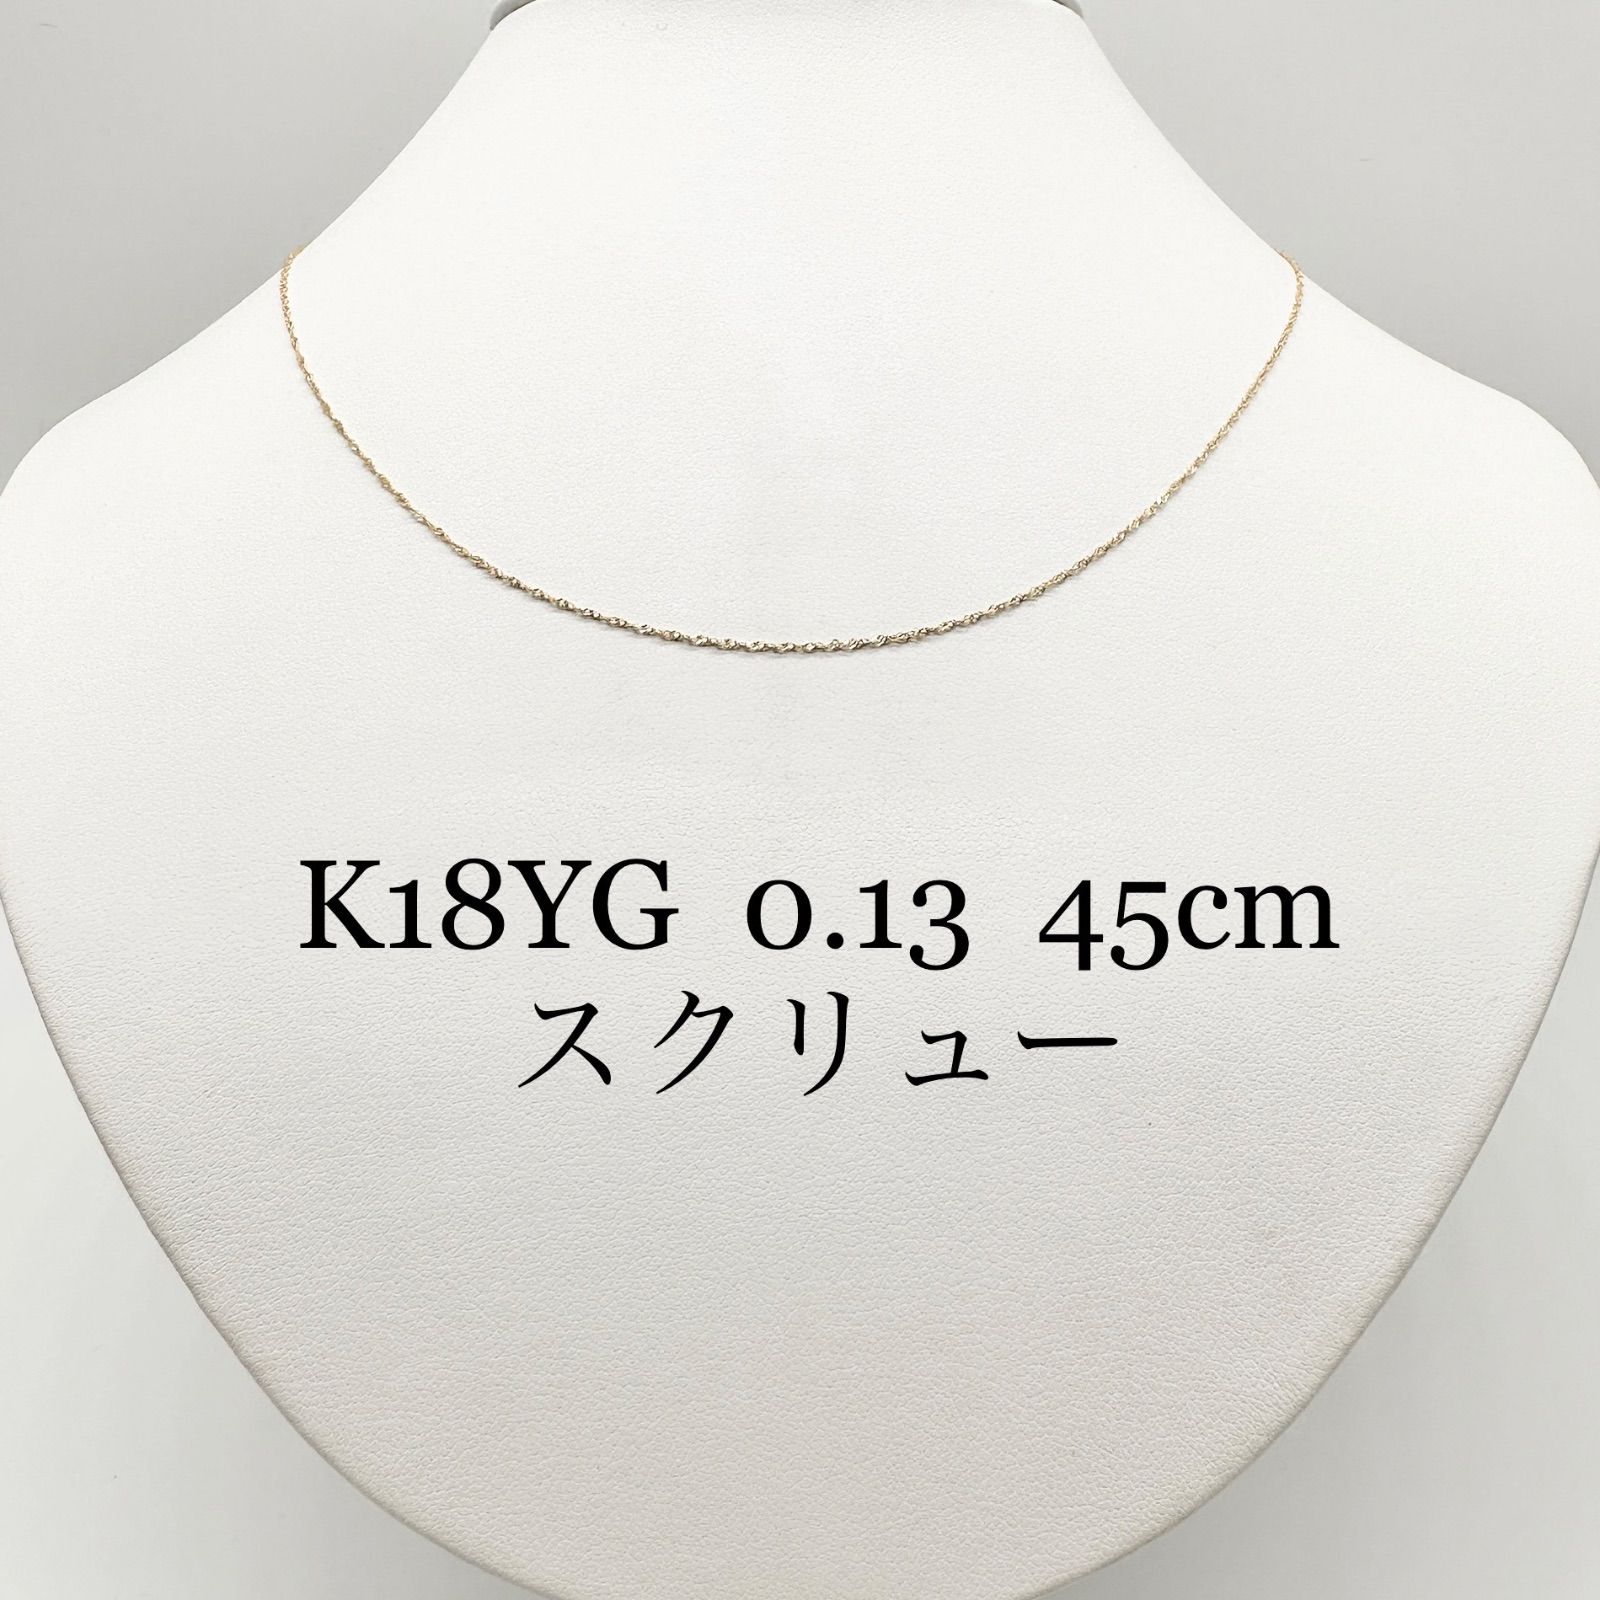 K18YG イエローゴールド 0.13スクリュー 45cm スライドピン ネックレス